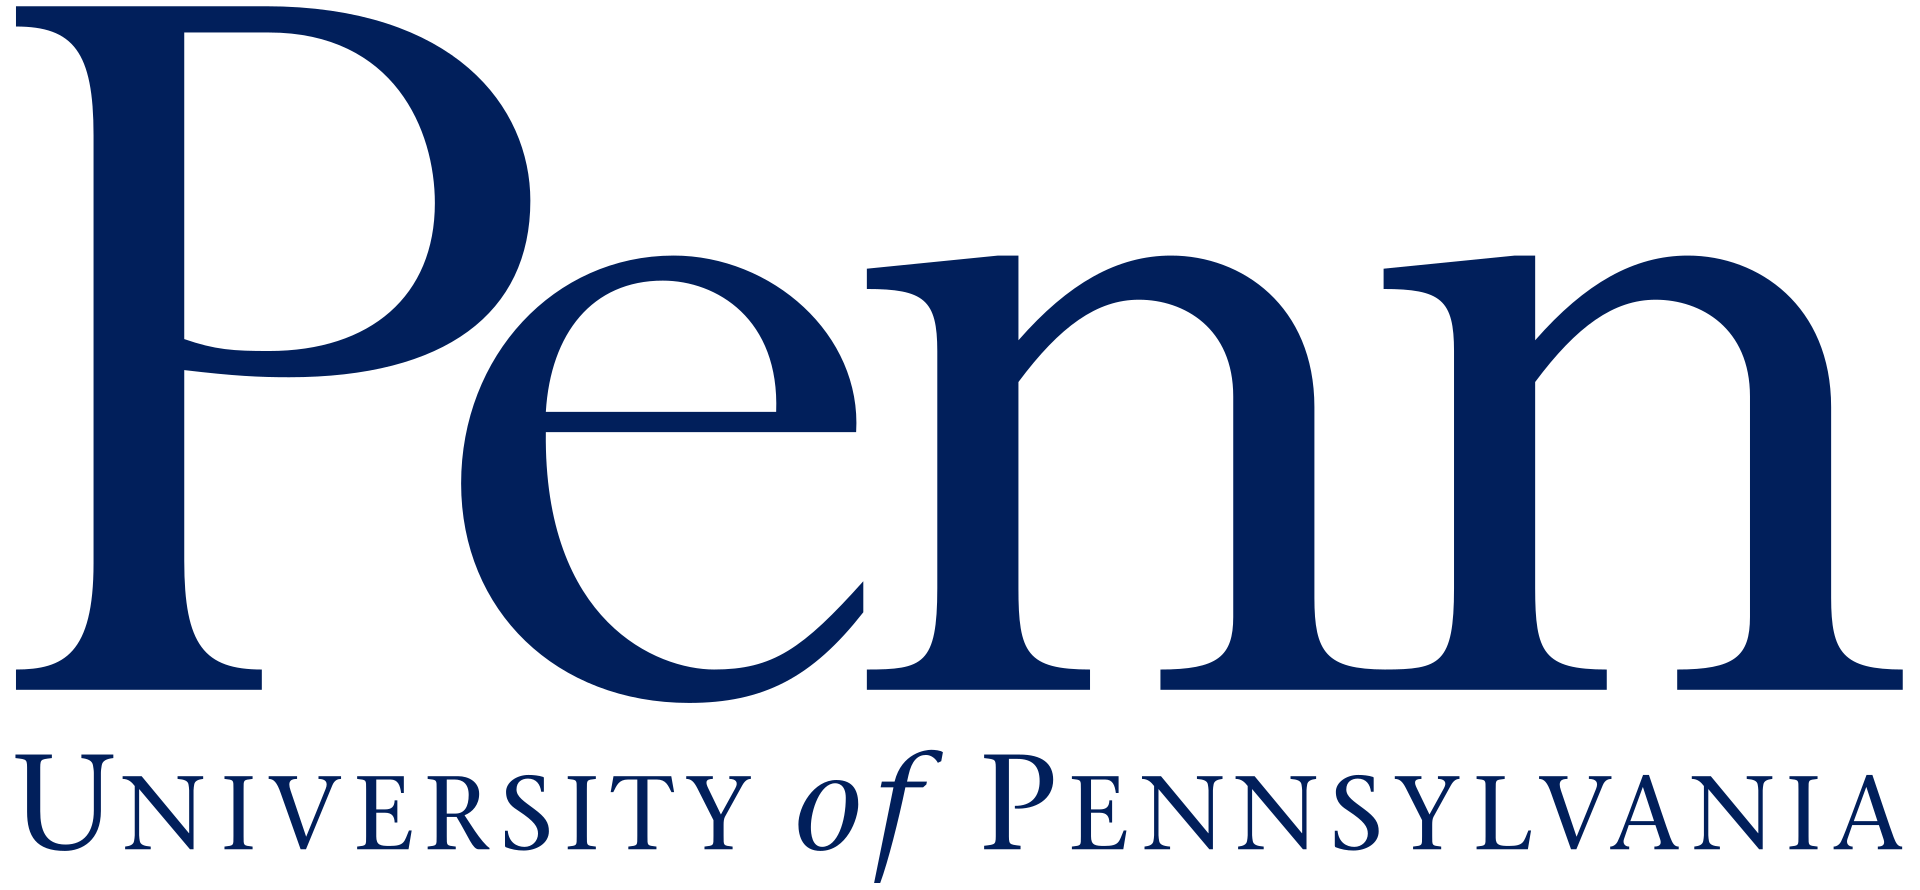 University of Pennsylvania logo, By University of Pennsylvania - https://www.upenn.edu/about/styleguide-logo-branding, Public Domain, https://commons.wikimedia.org/w/index.php?curid=66569976